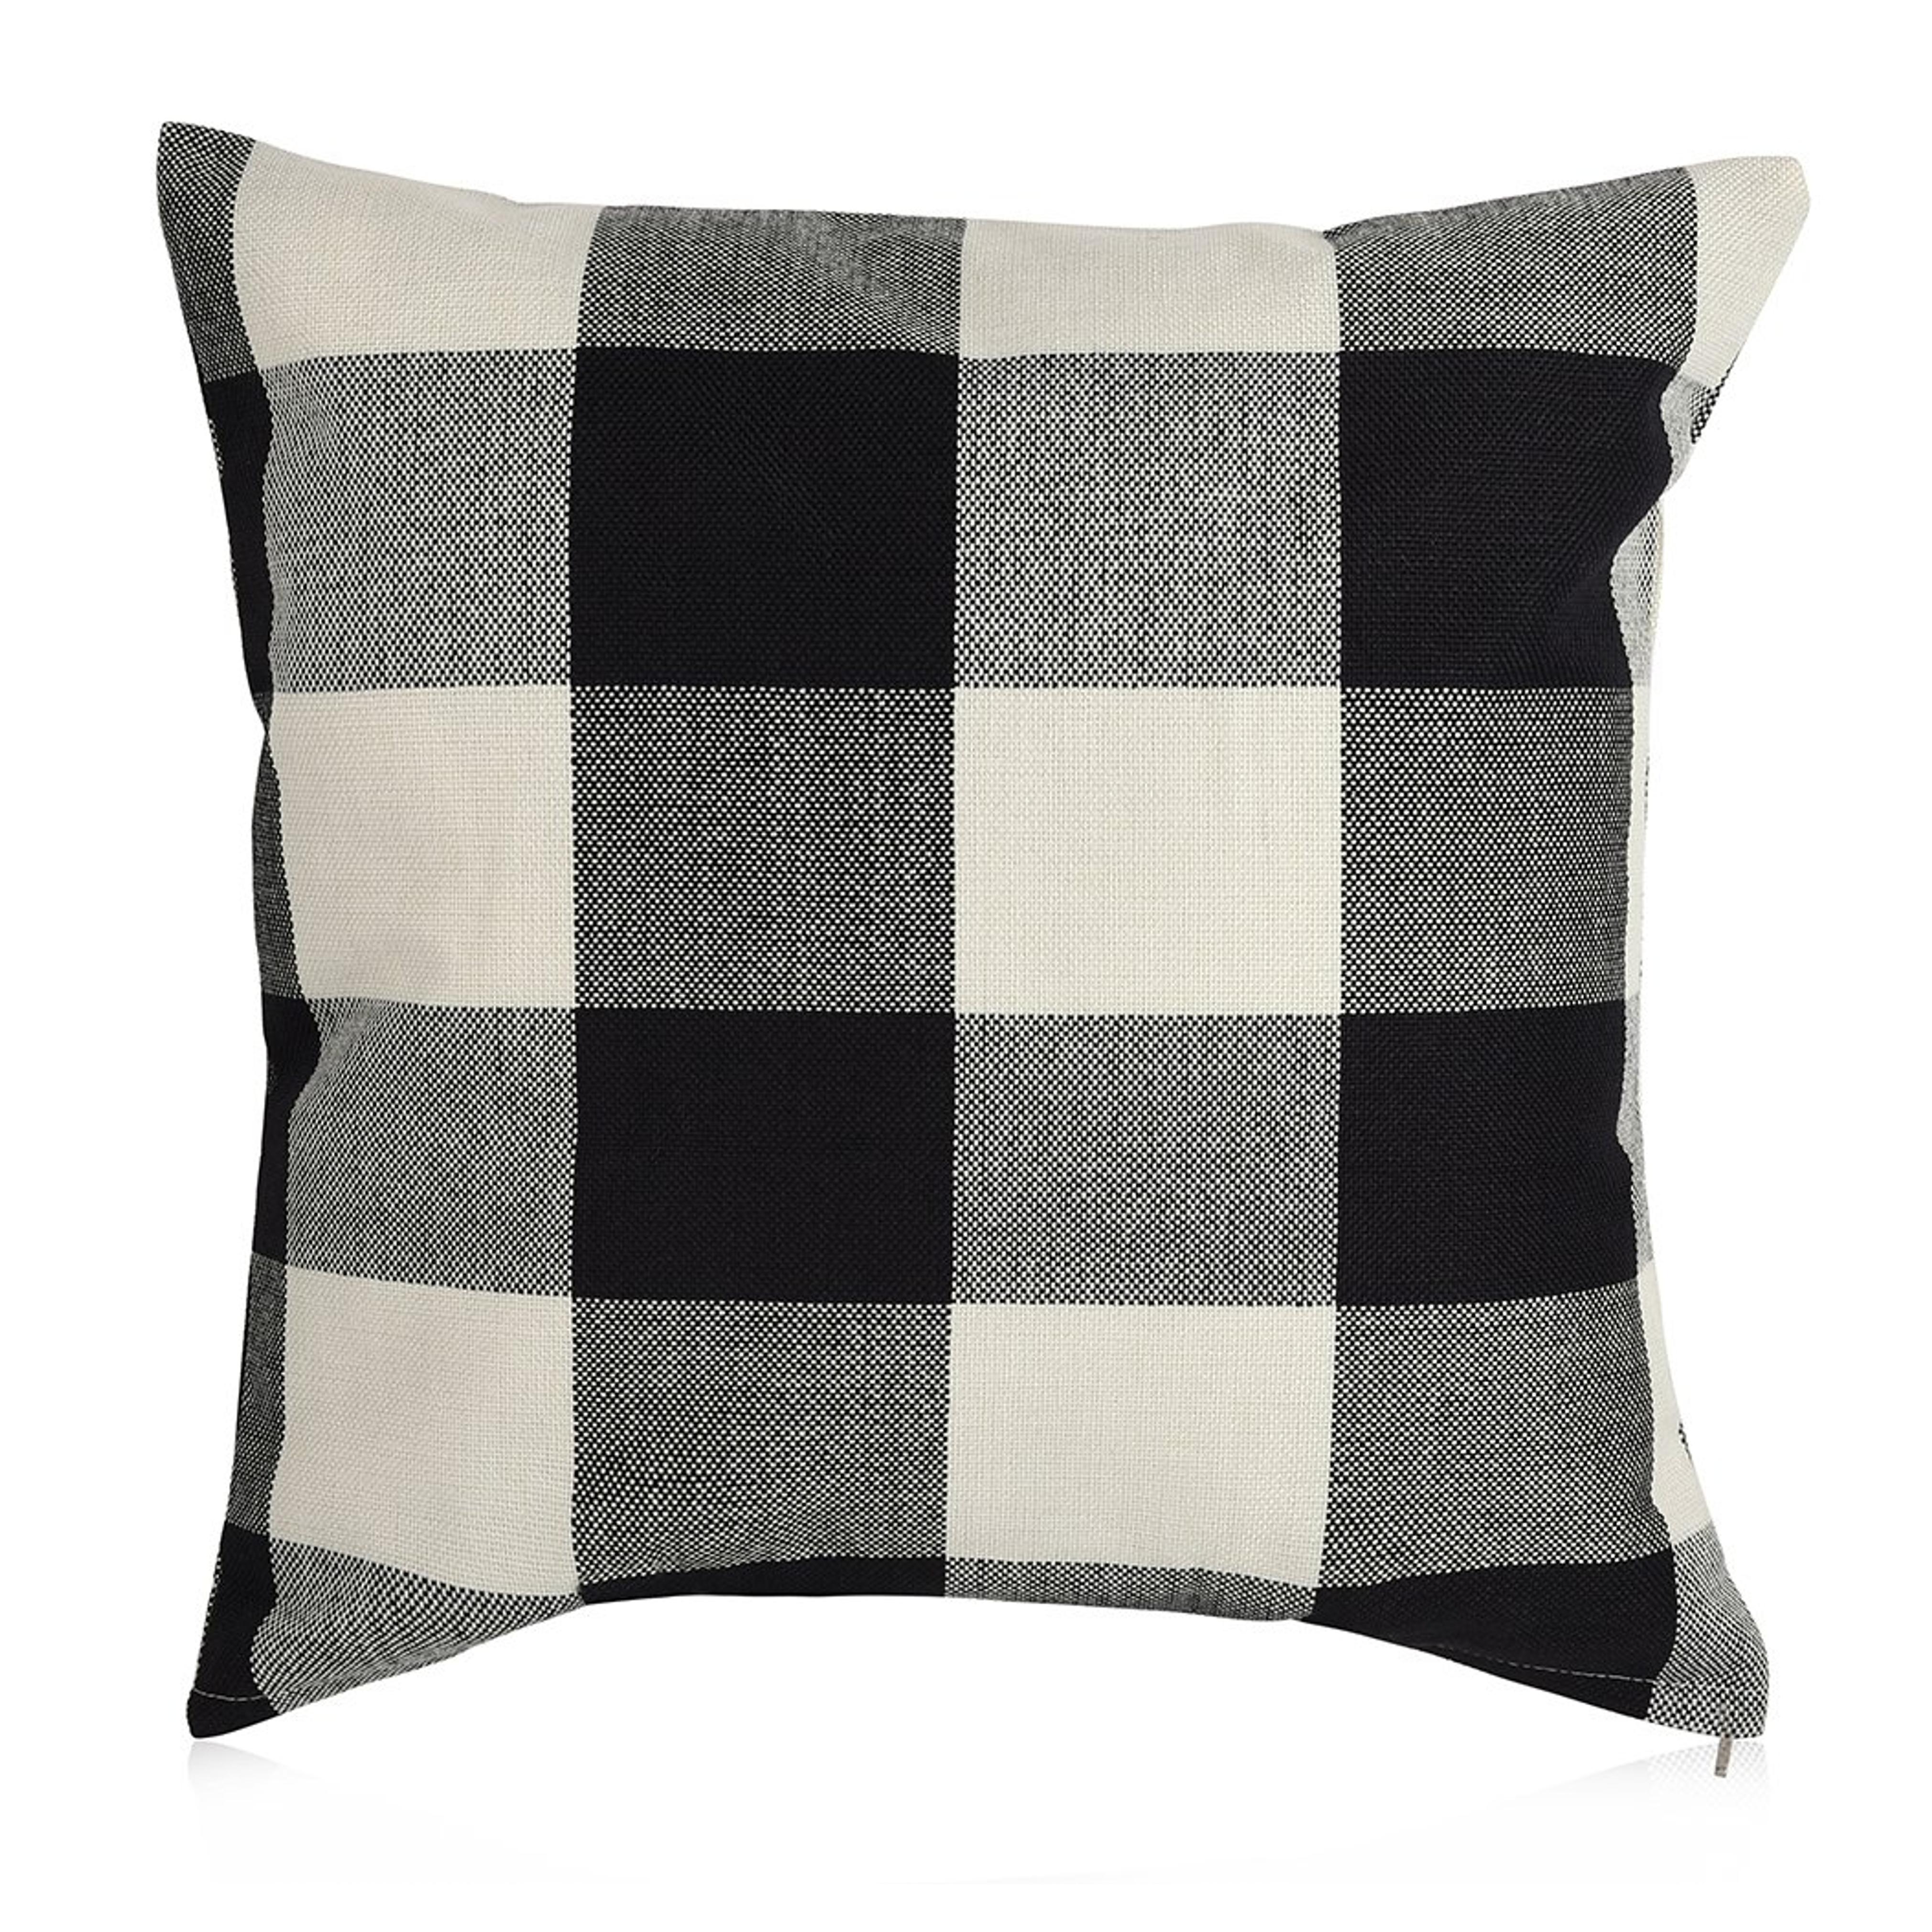 Black White Checkers Plaids Throw Pillow Case Sham Decor Cushion Covers Square 18x18 Inch Linen